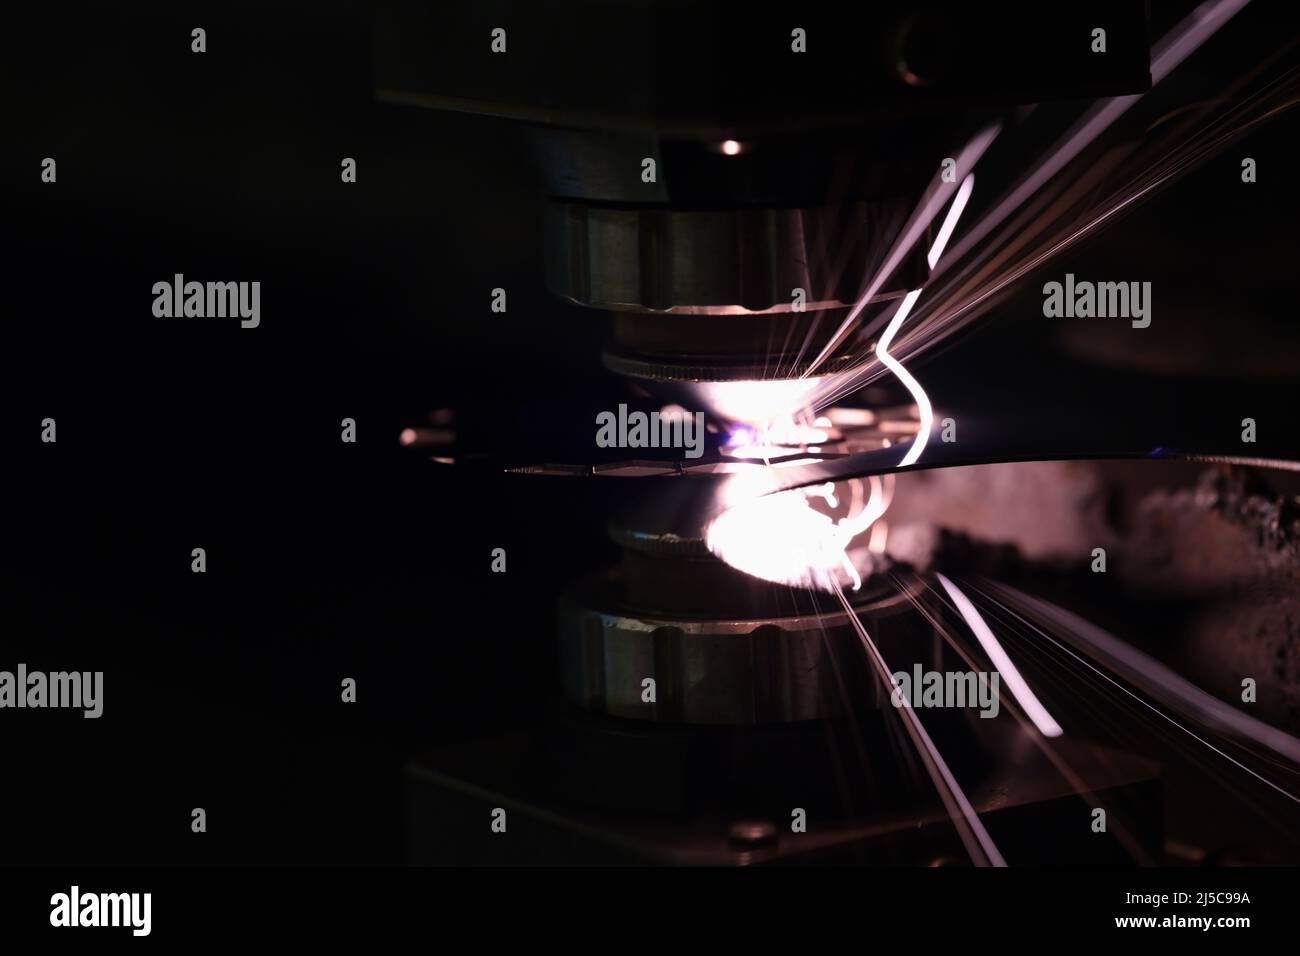 Laser cutting machine for CNC metal processing closeup Stock Photo